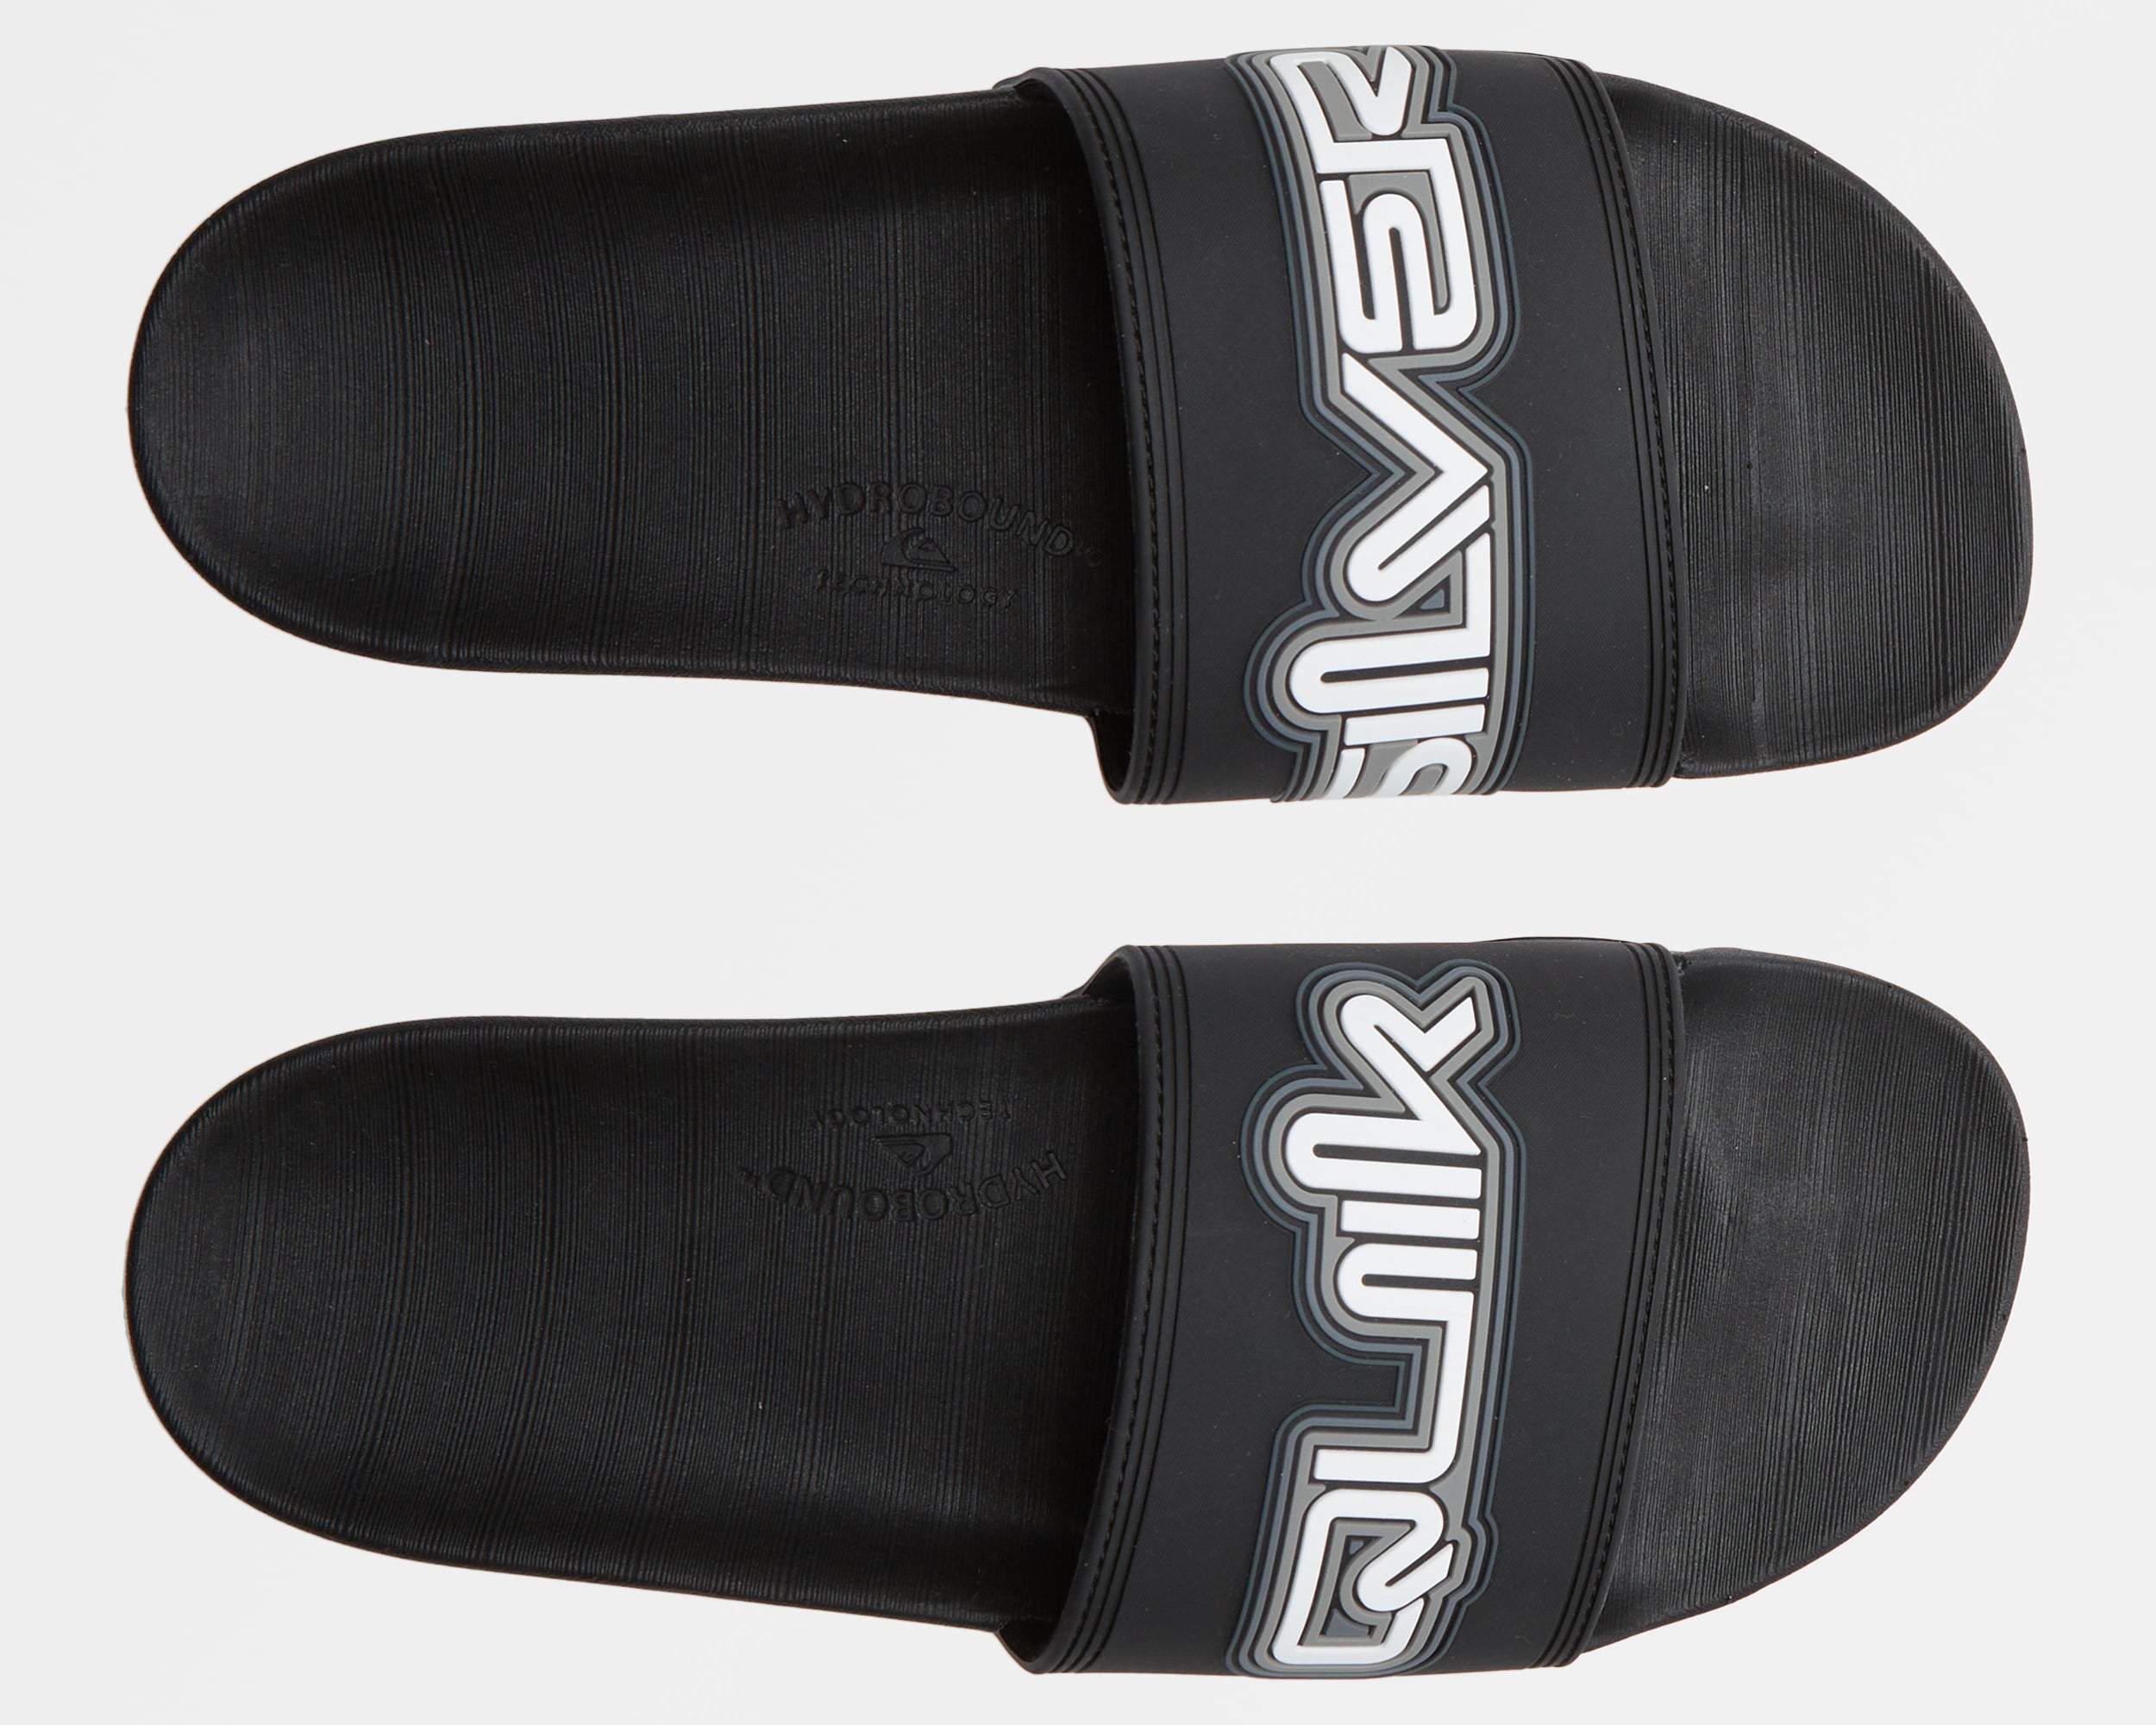 Rivi Wordmark Slide II Sandals - Black 1